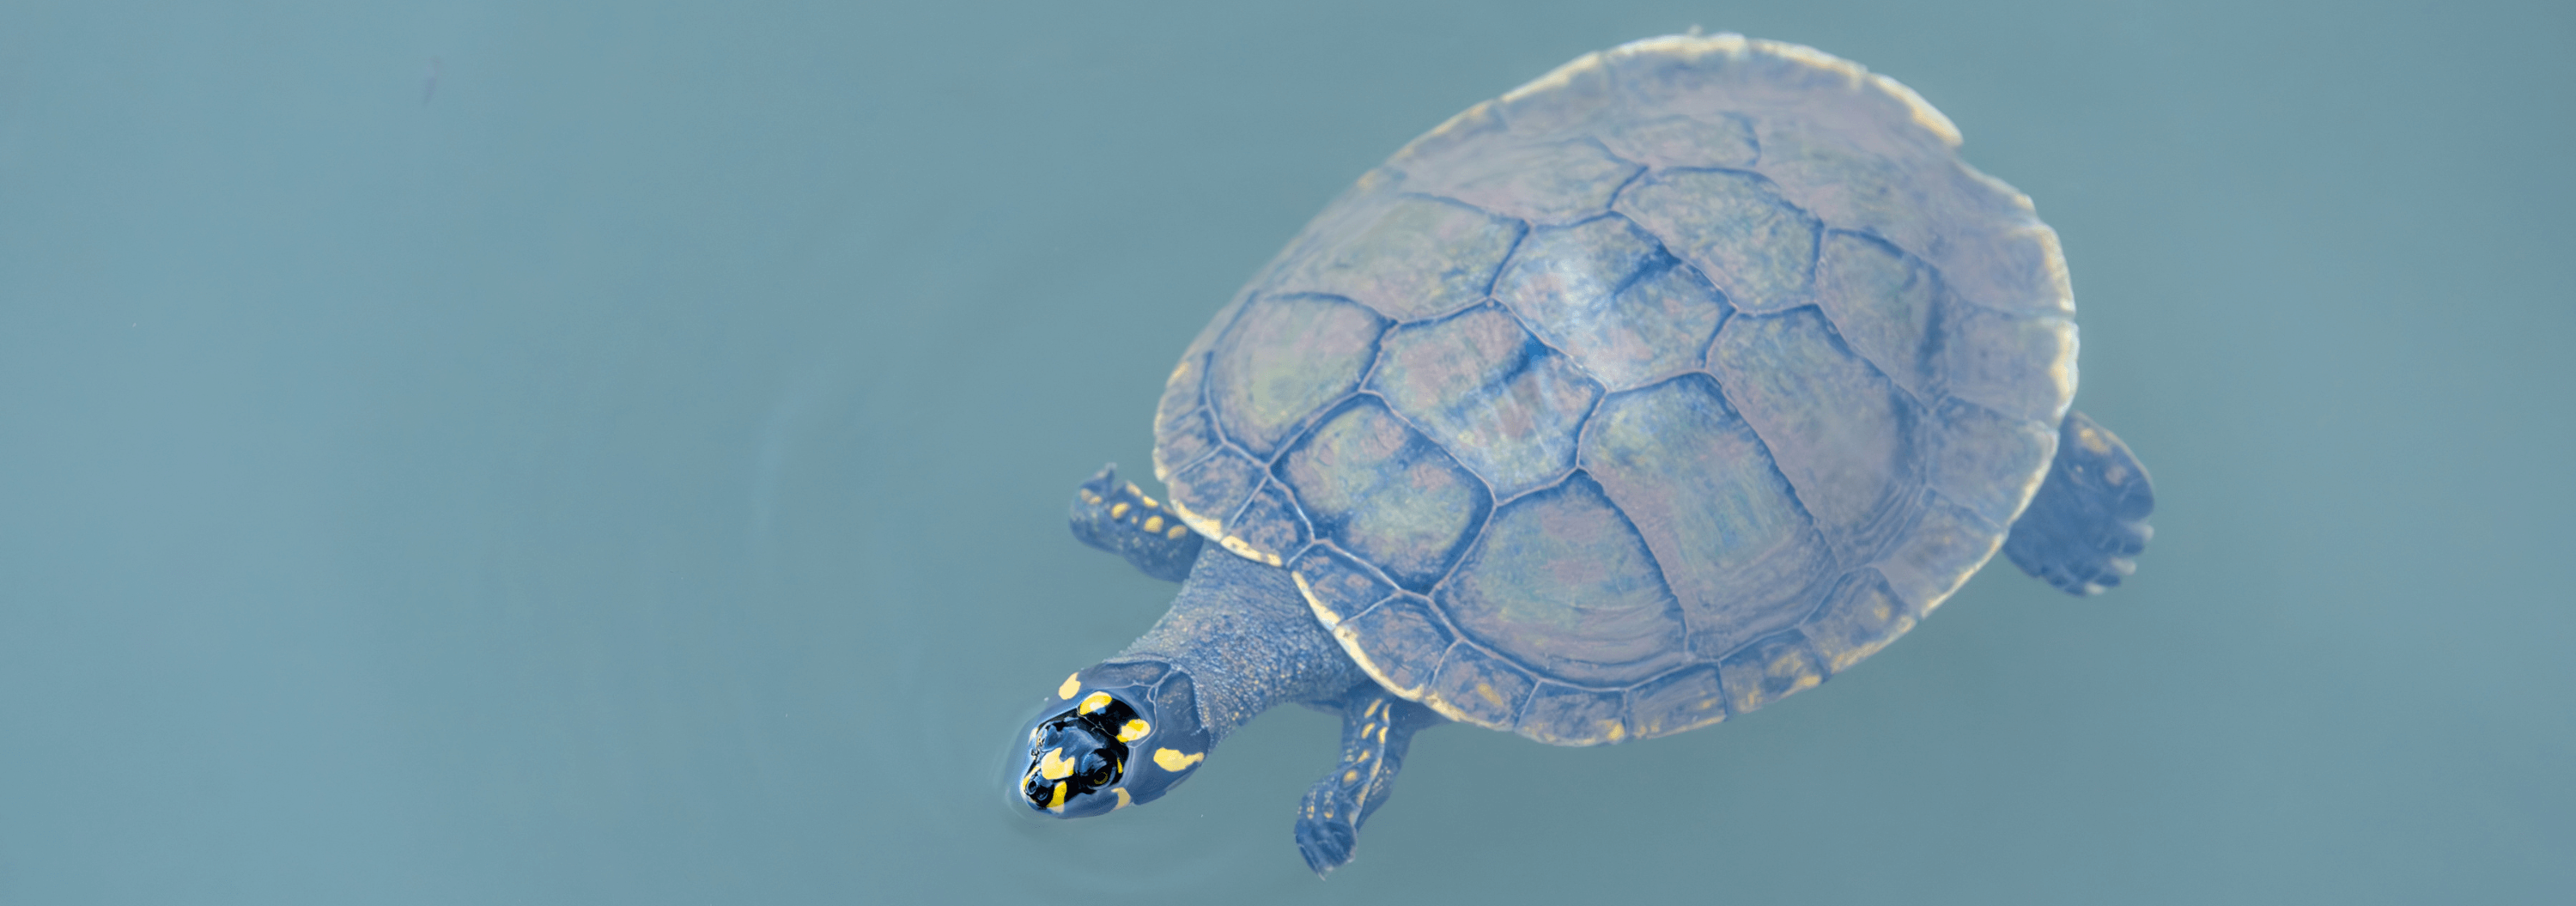 Amazon River Turtles